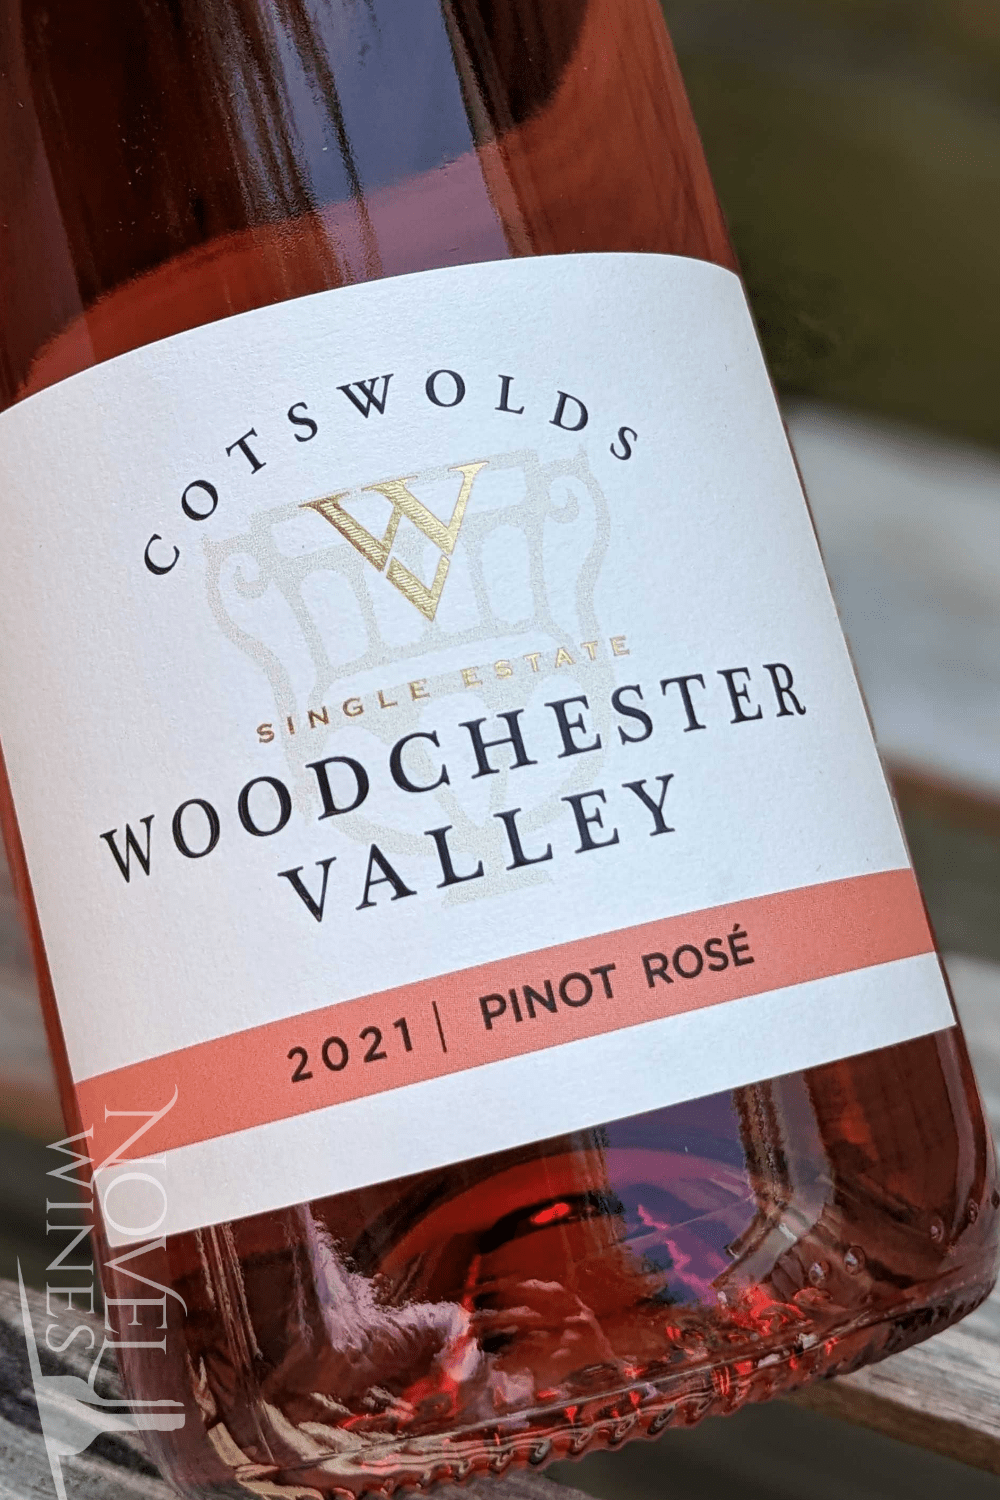 Woodchester Valley Vineyard Rose Wine Woodchester Valley Vineyard Pinot Rosé 2021, England